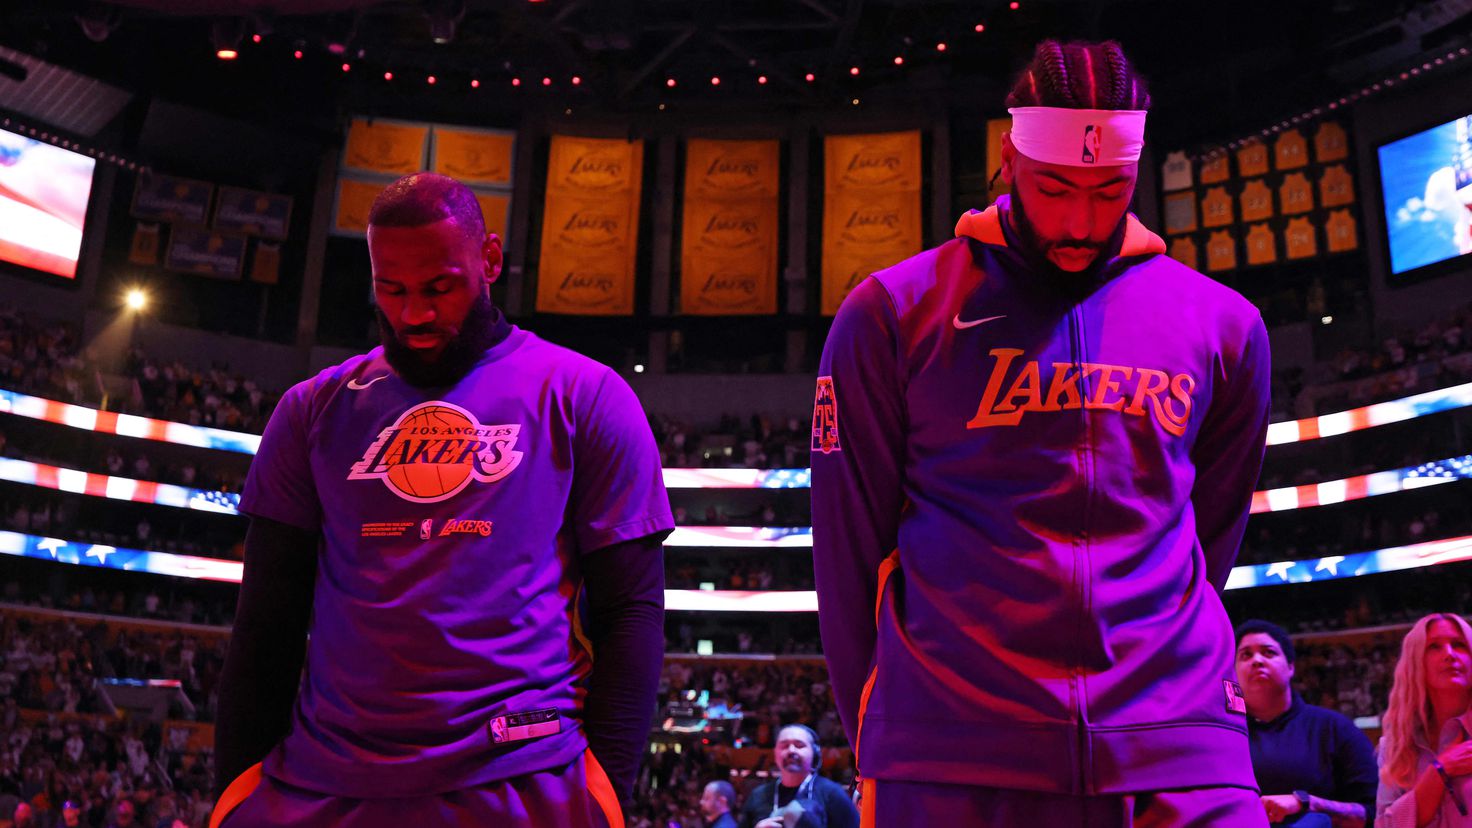 The Lakers, uncertain future: LeBron, Reaves, Davis...
